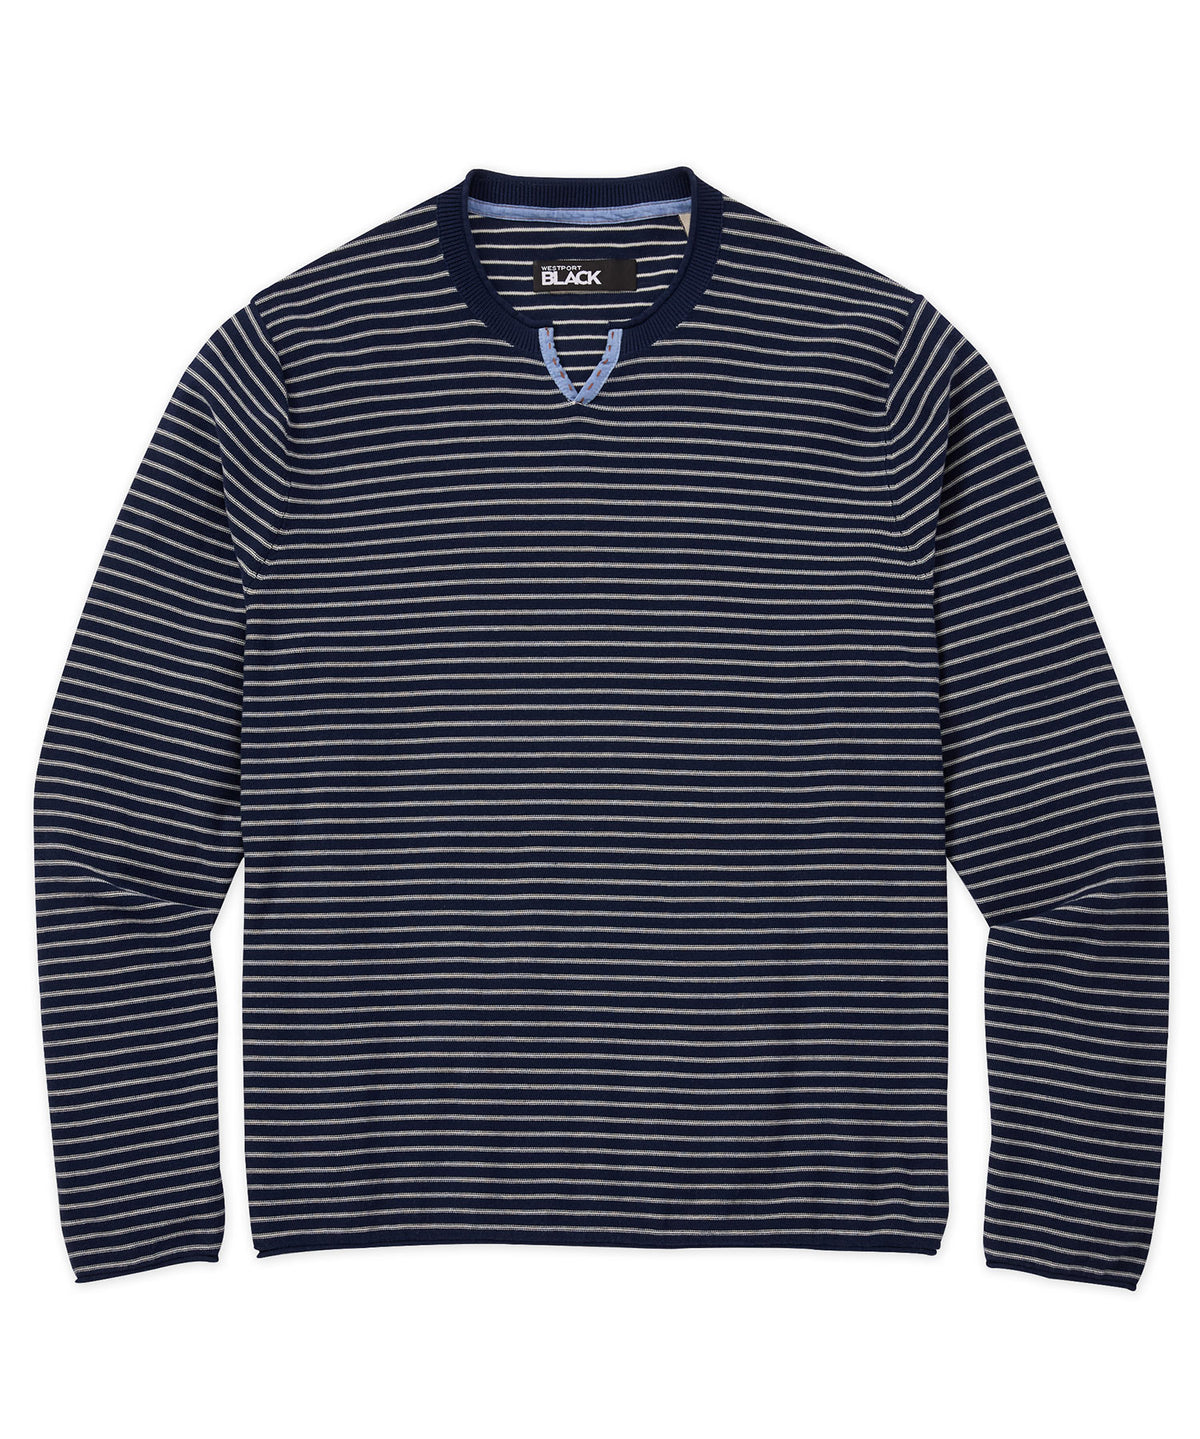 Westport Black Stripe Long Sleeve Sweater, Men's Big & Tall